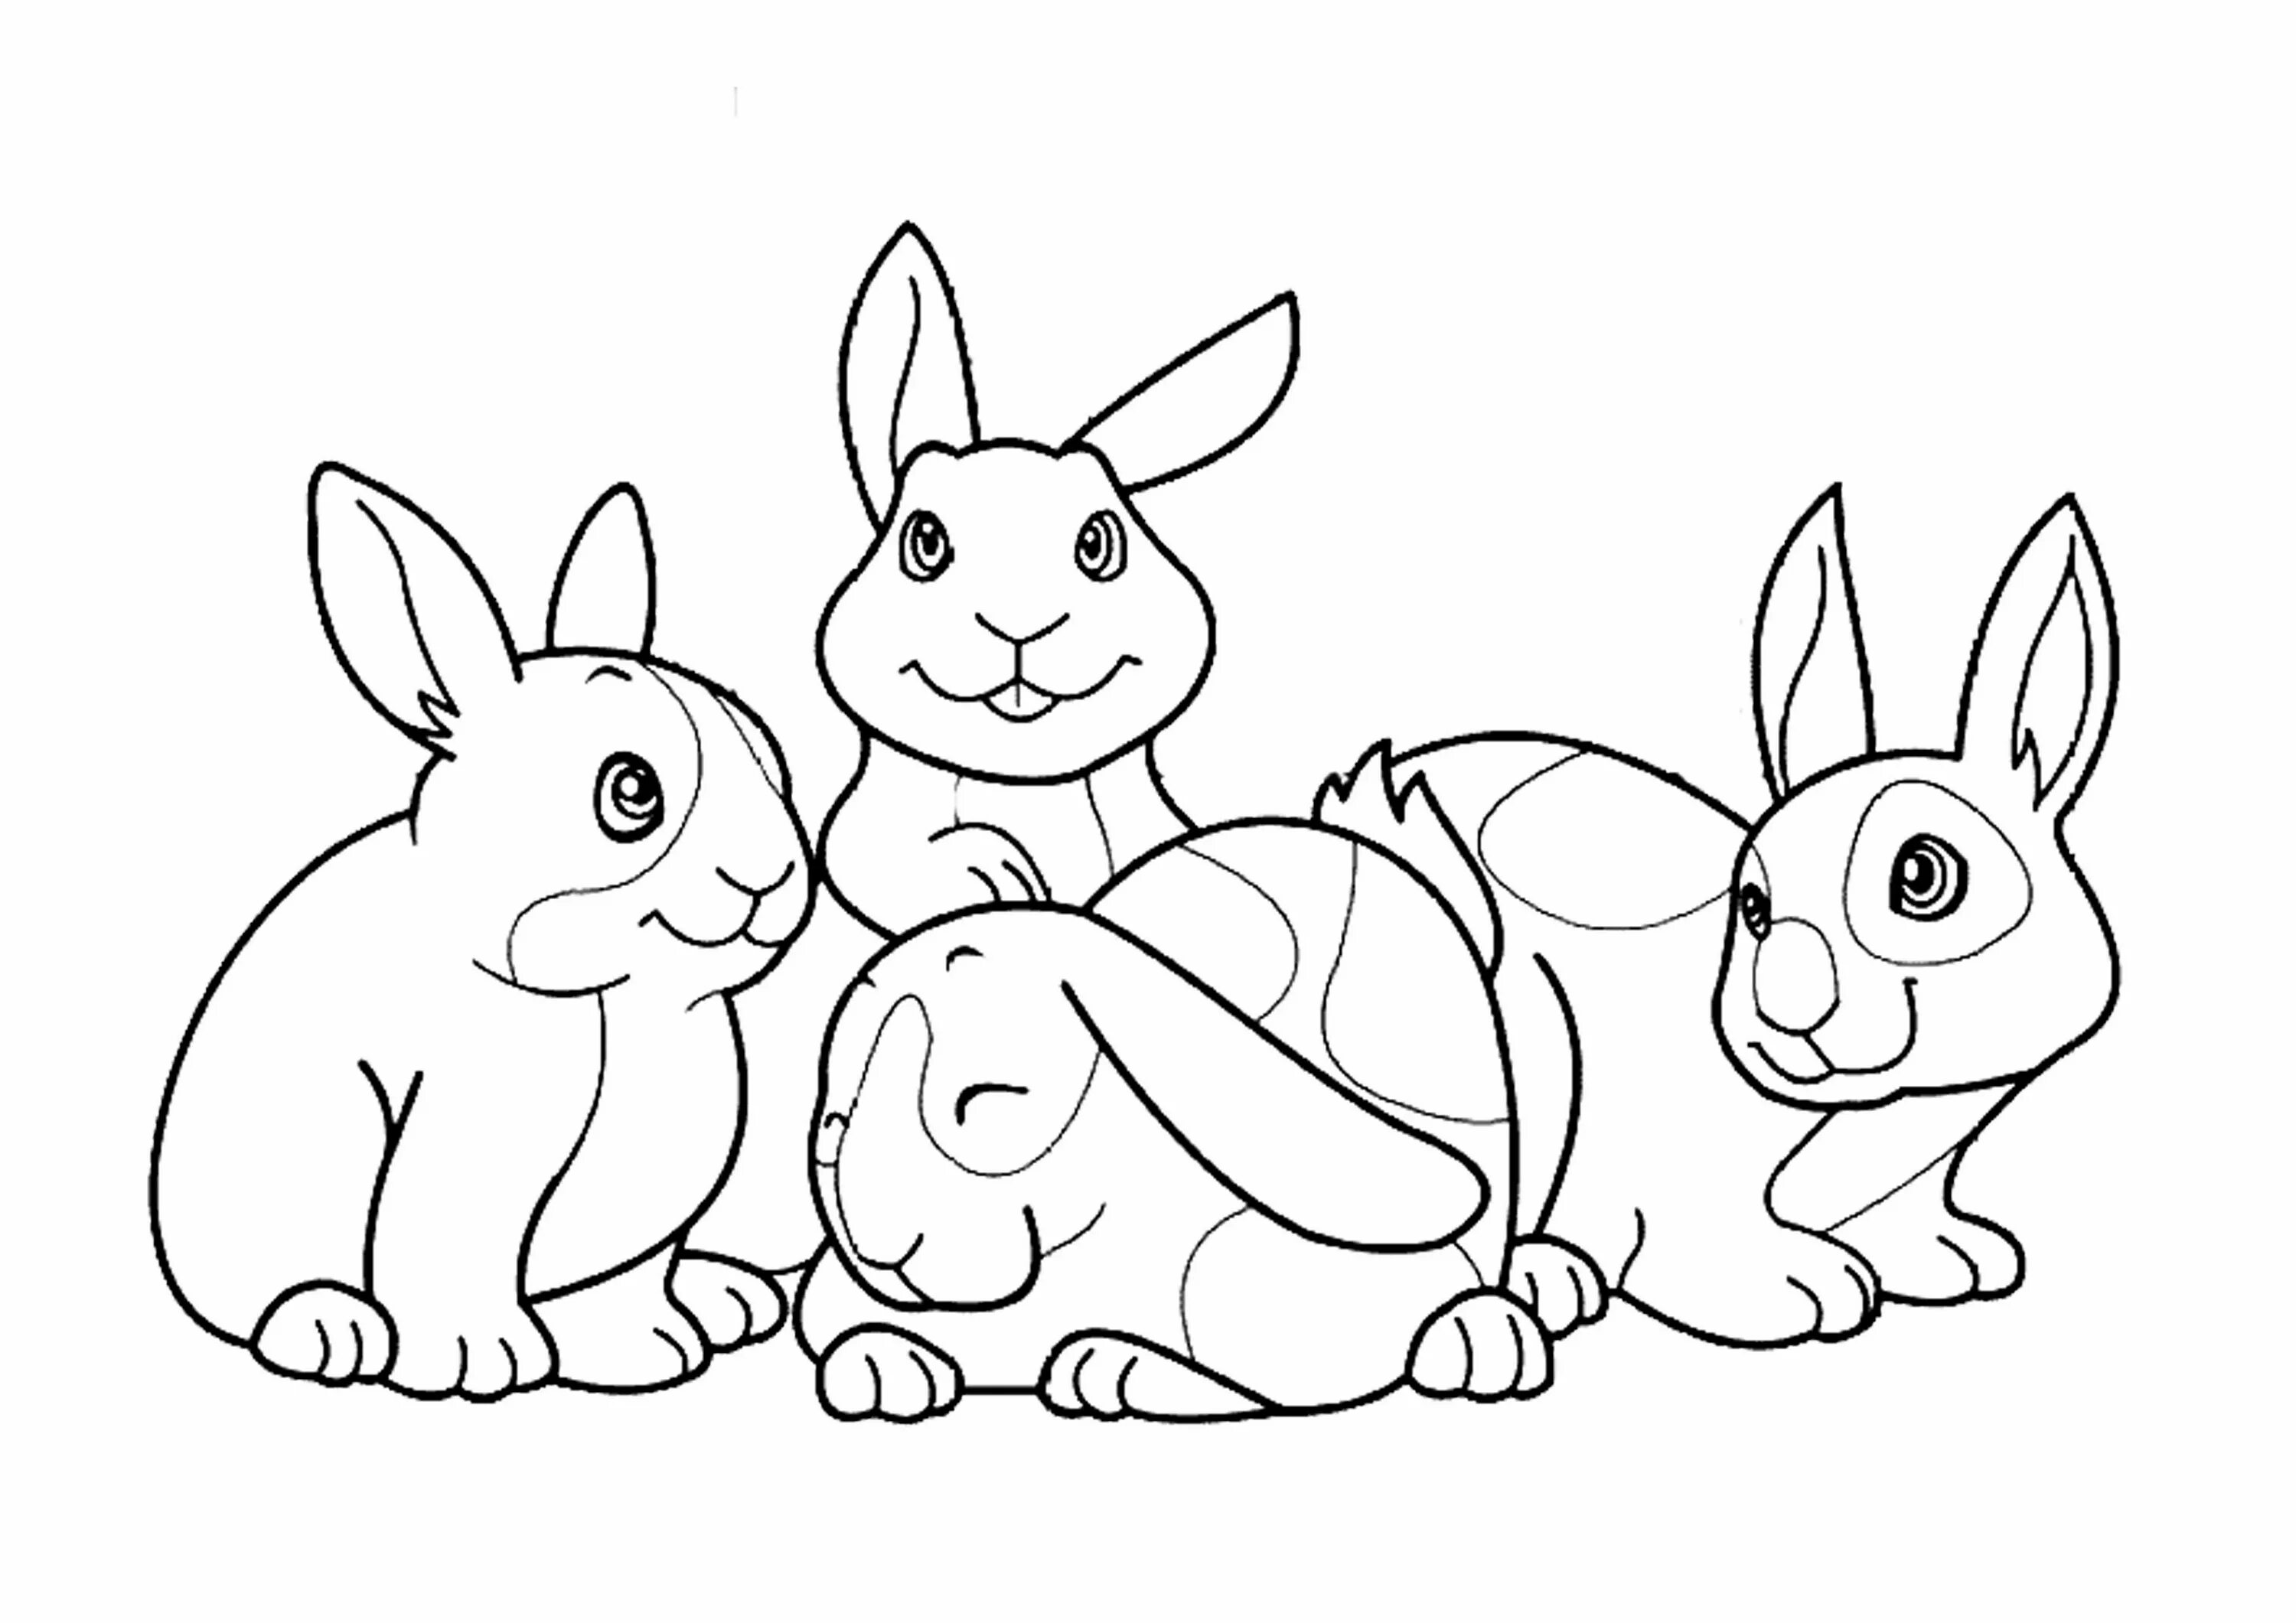 For girls bunnies #3